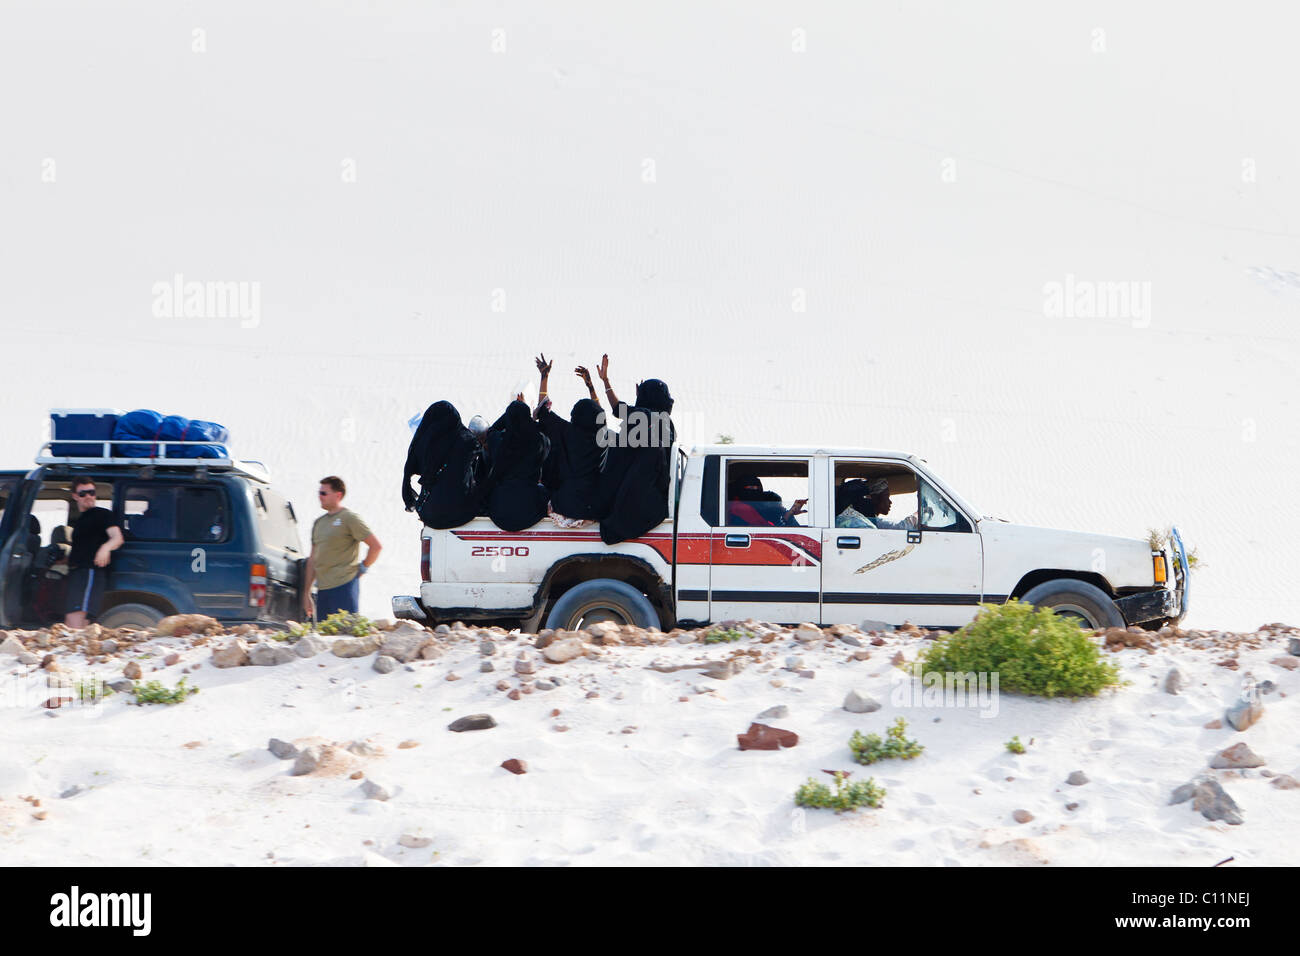 Birkha Clad ladies wave to a tourist on Socotra Stock Photo